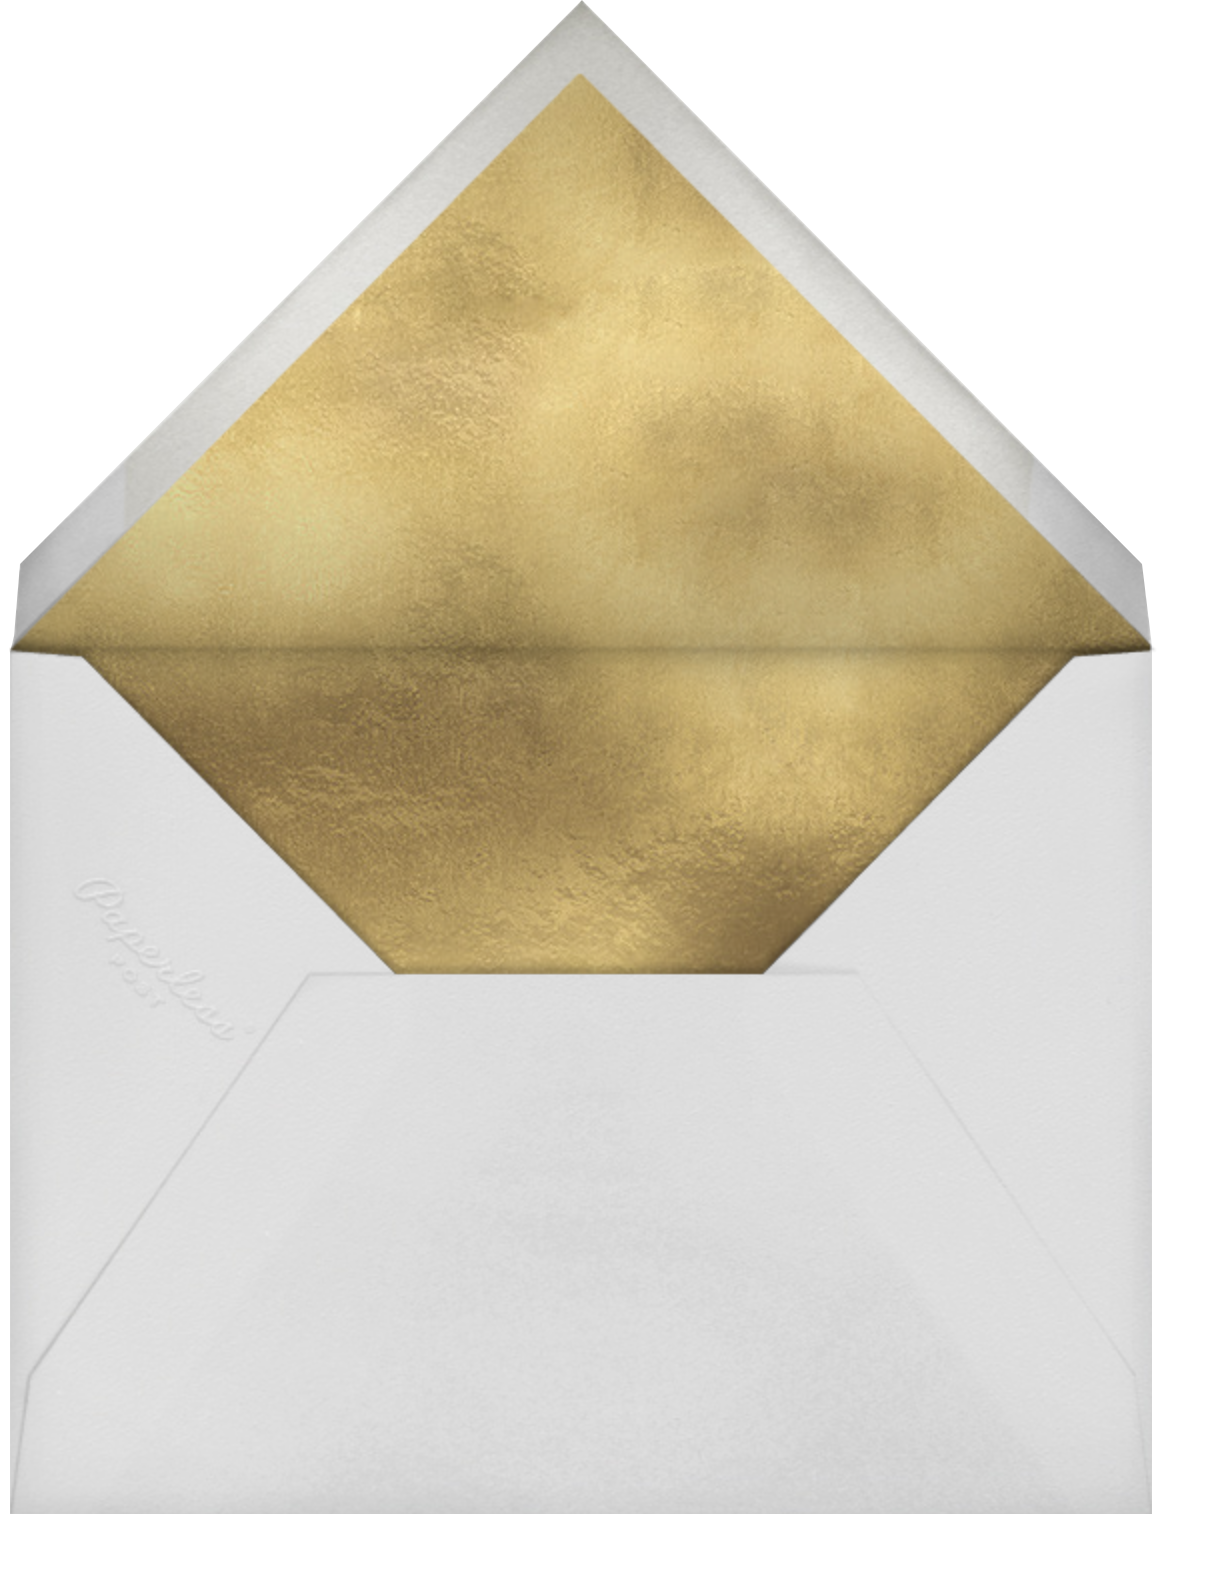 Walker (Invitation) - Paperless Post - Envelope